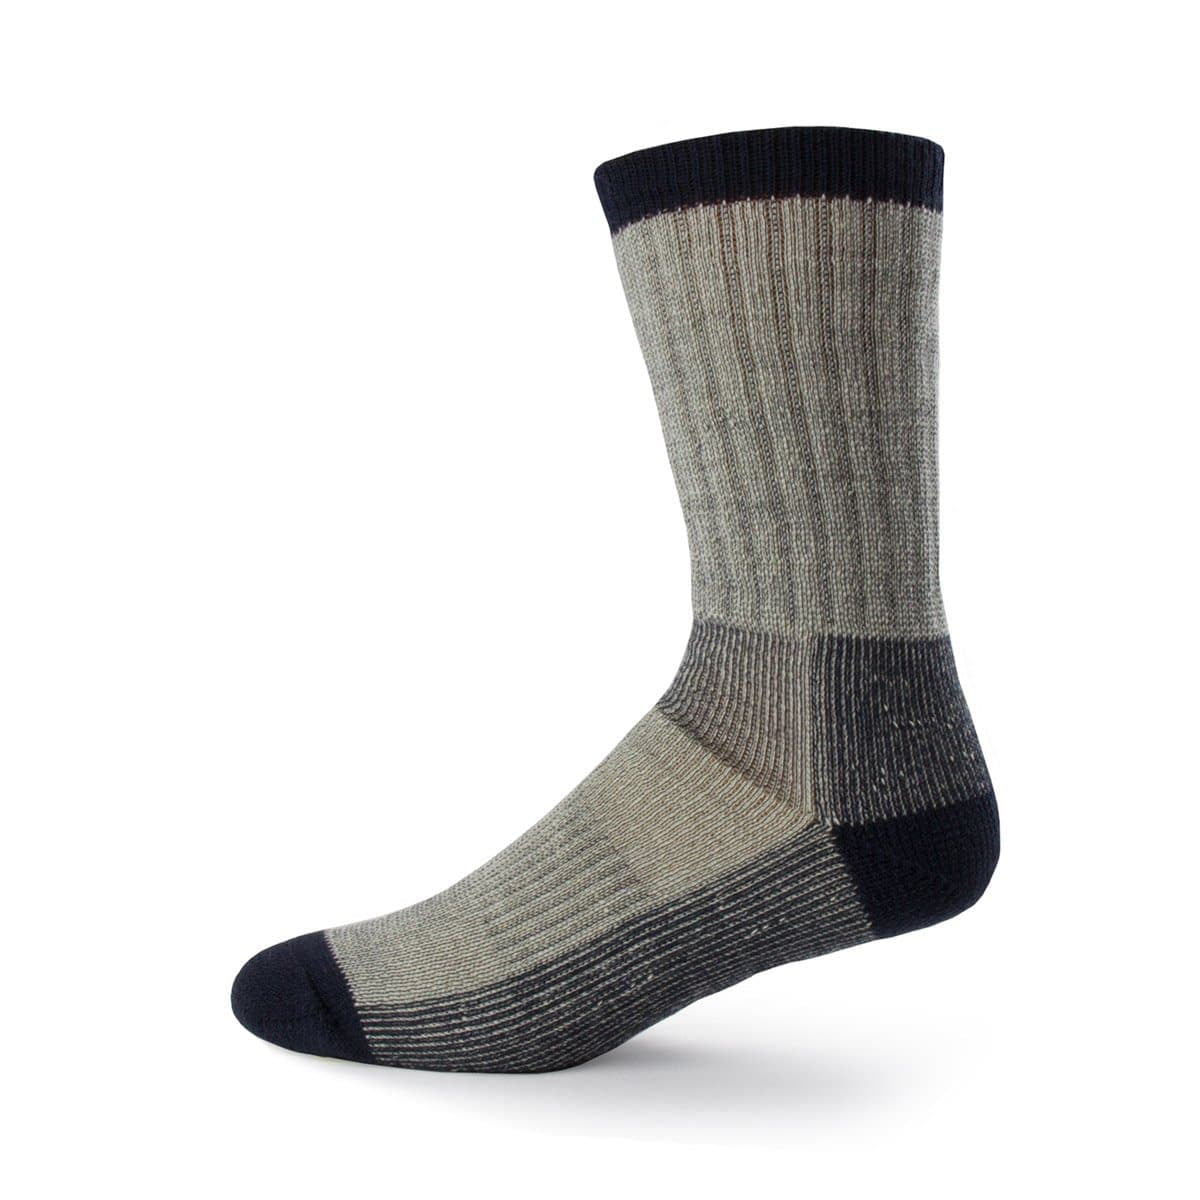 6 pair $39.99 Large Catawba Outdoor Supply Camo Merino Wool Boot Sock 